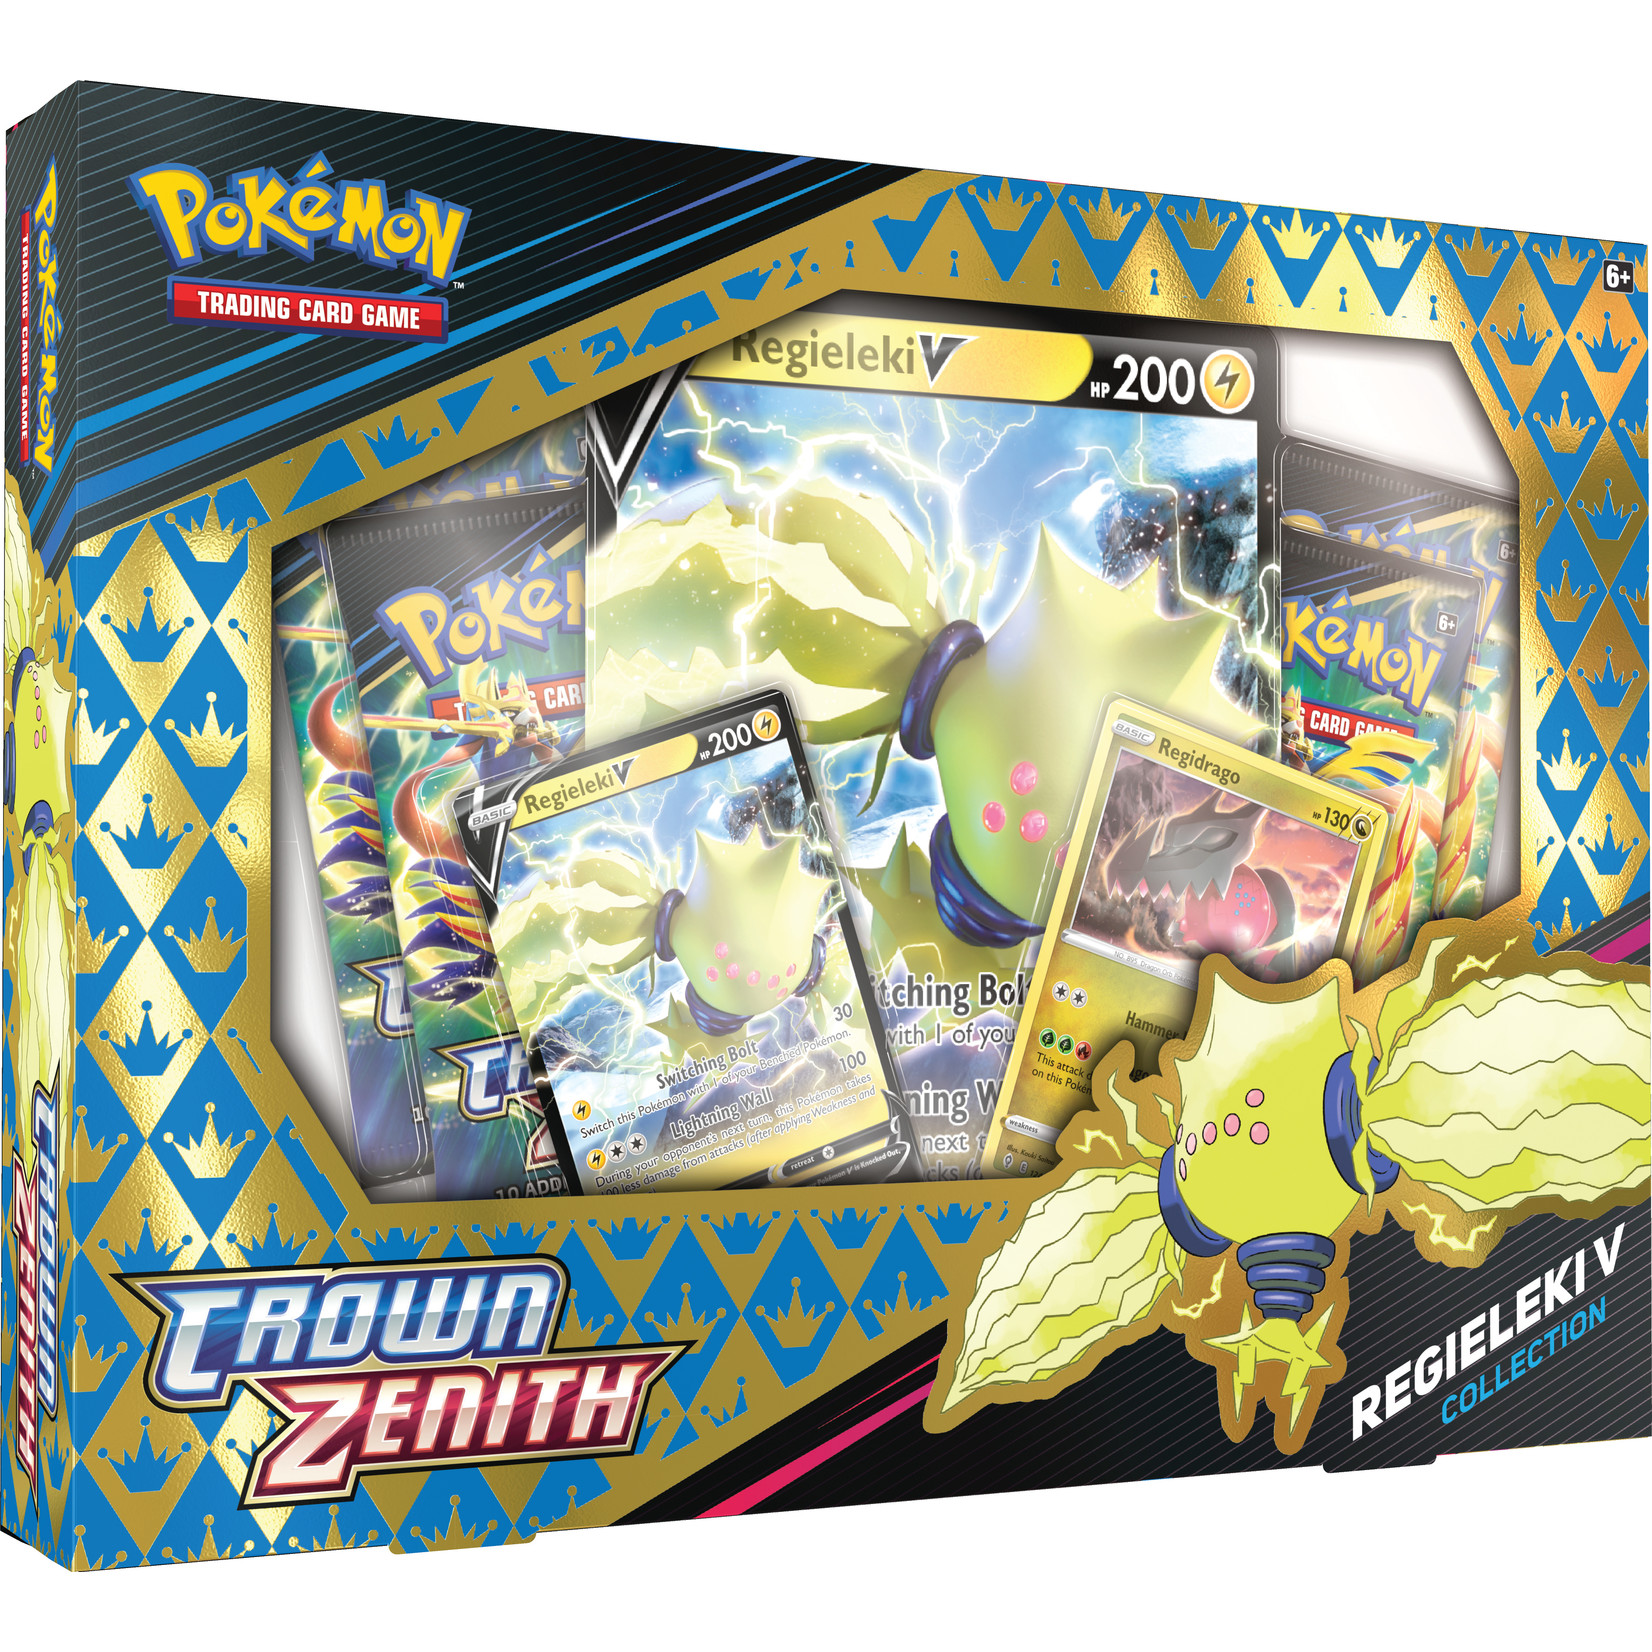 Pokémon Pokemon TCG: Crown Zenith Collection - Regieleki V